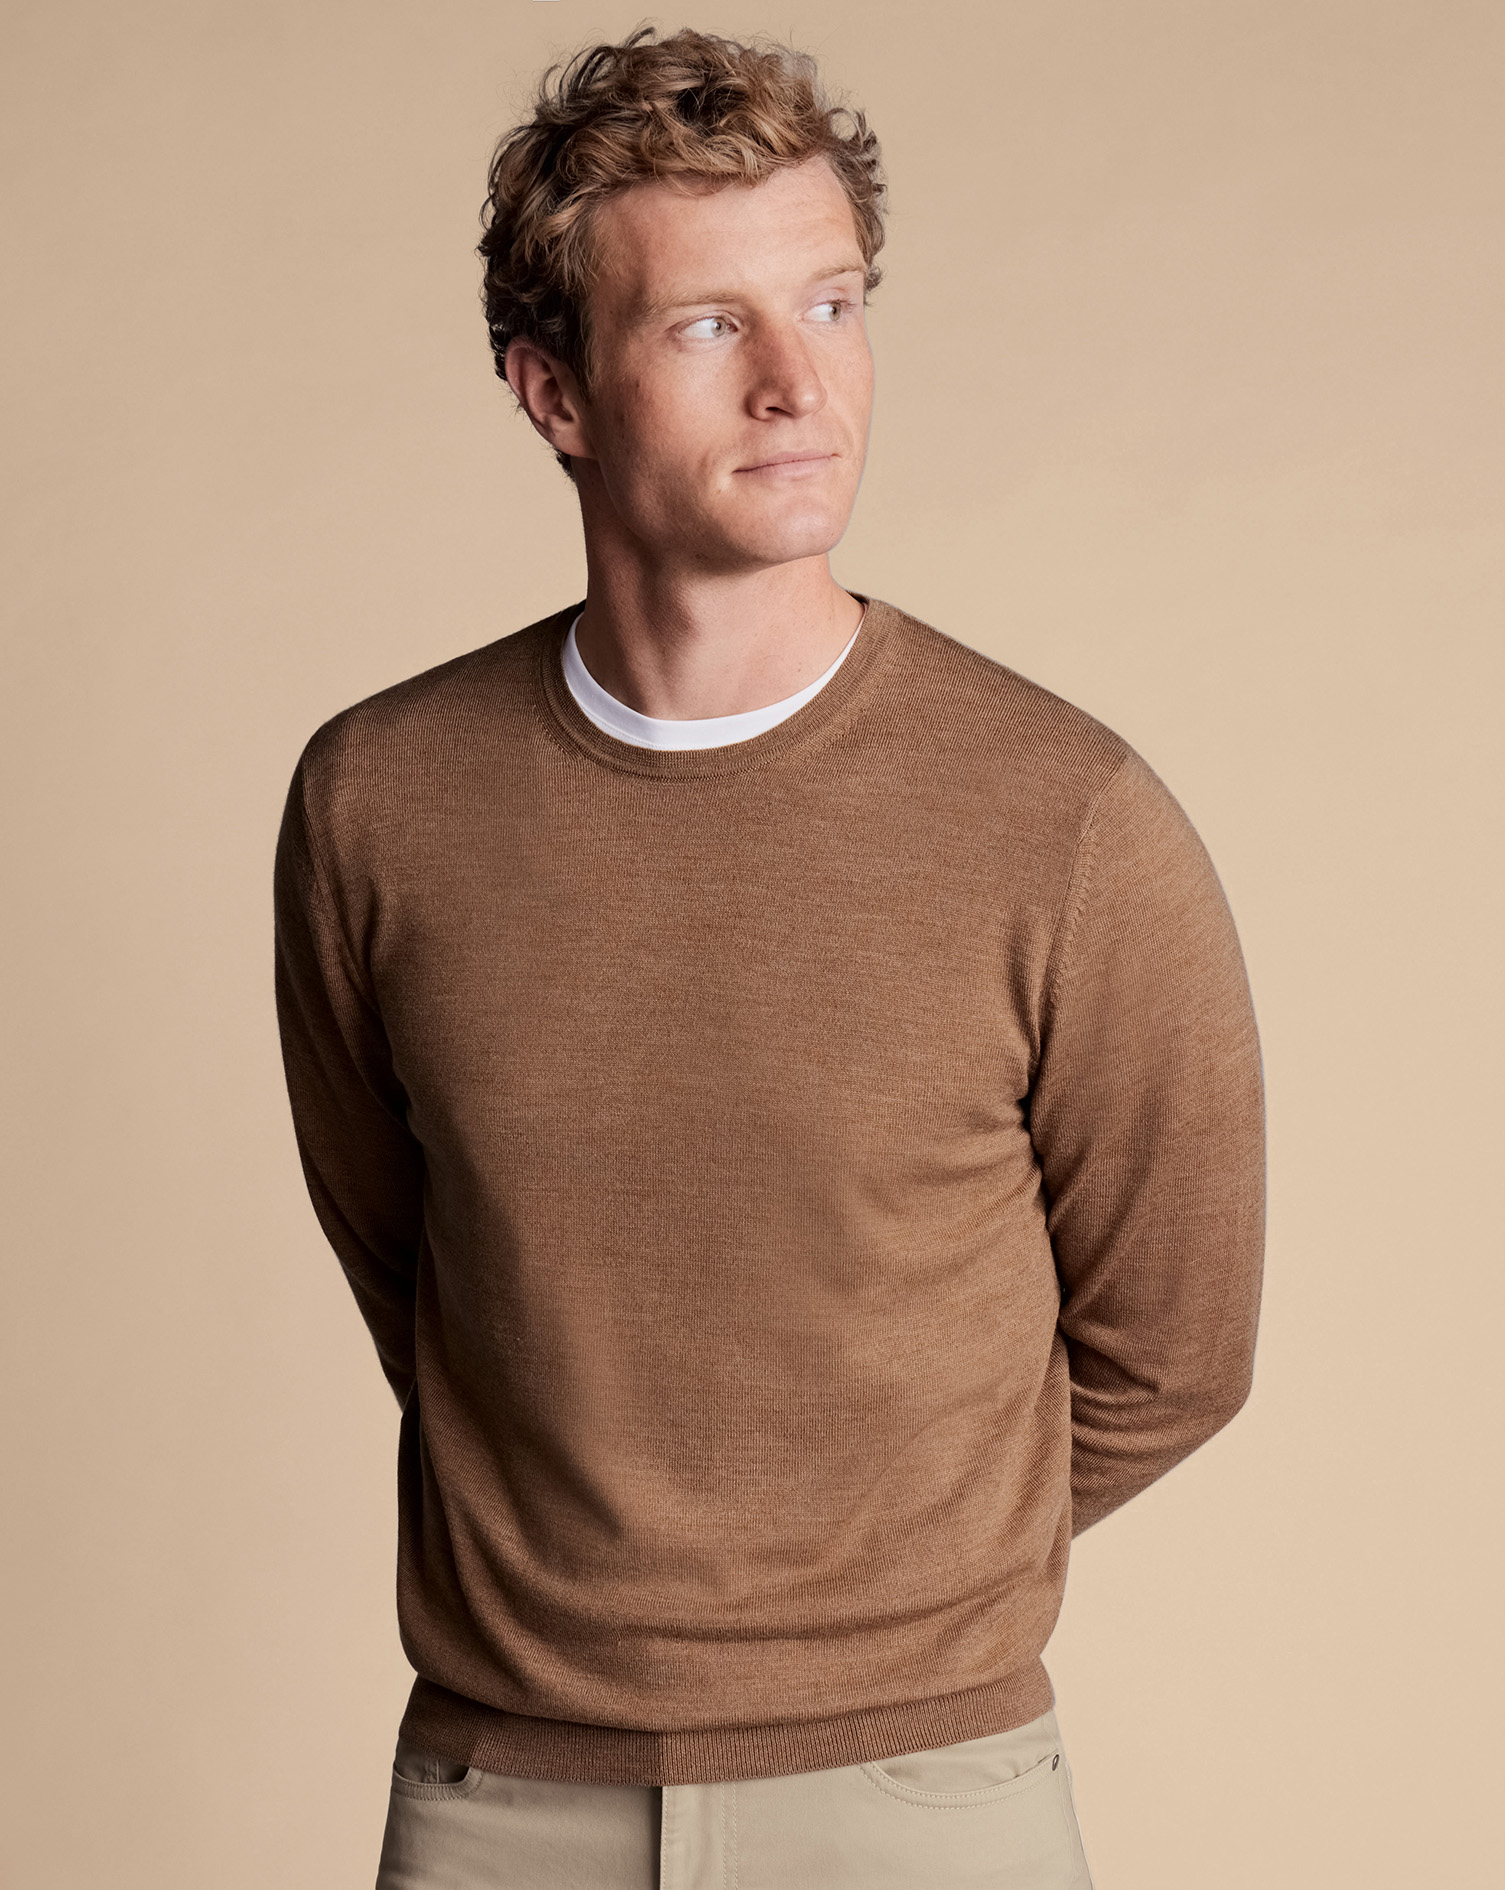 Men's Charles Tyrwhitt Merino Crew Neck Sweater - Sand Brown Neutral Size Small Wool
